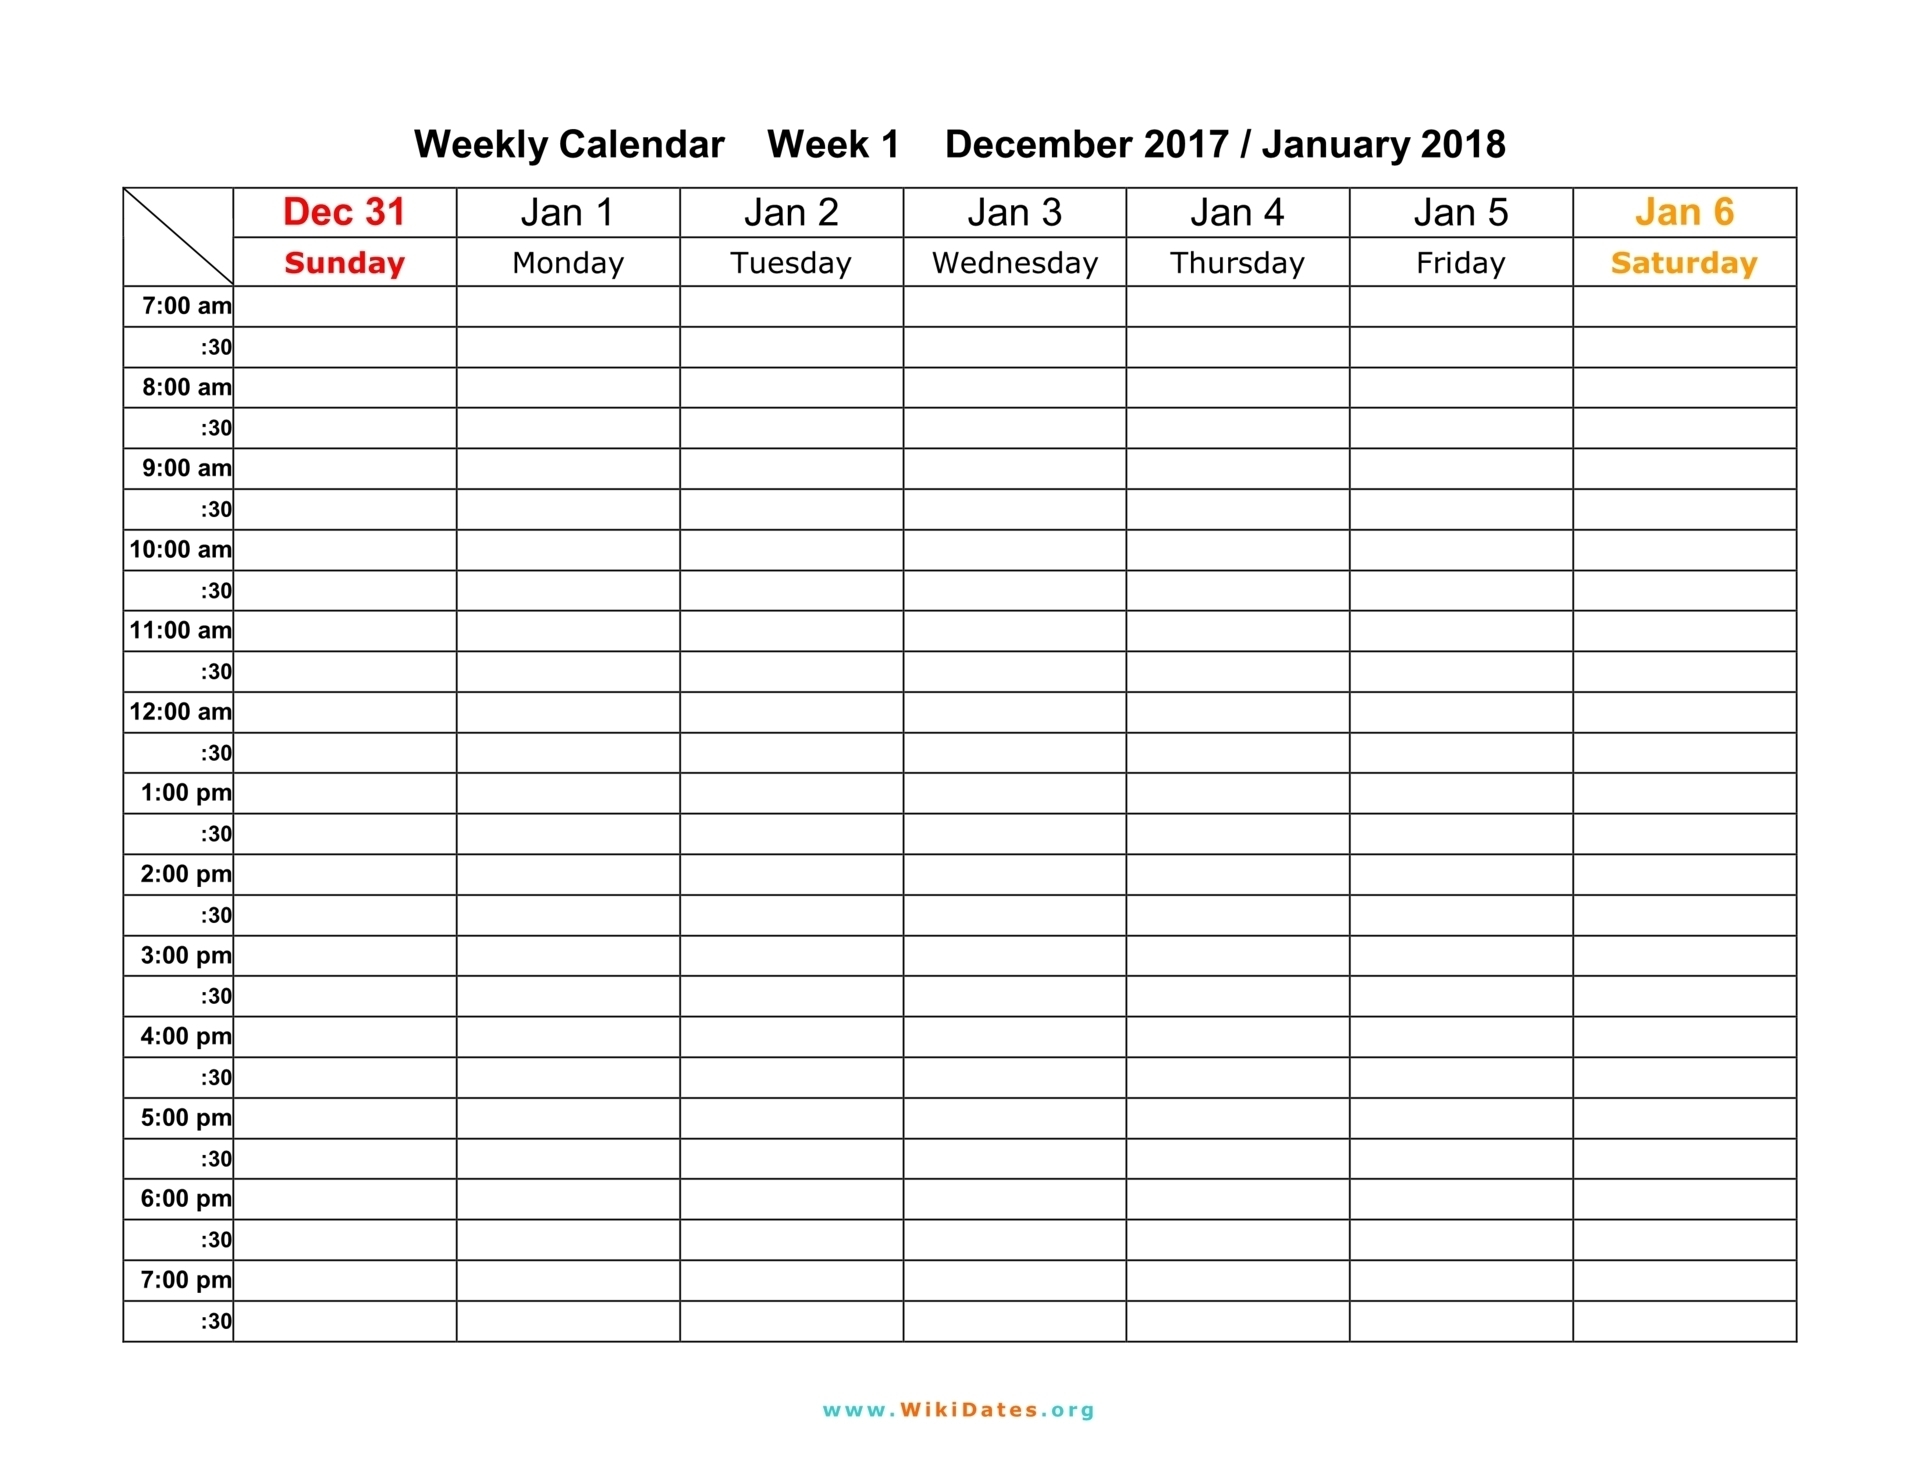 Weekly Calendar - Download Weekly Calendar 2017 And 2018| Wikidates in Free Printable Weekly Schedule Page